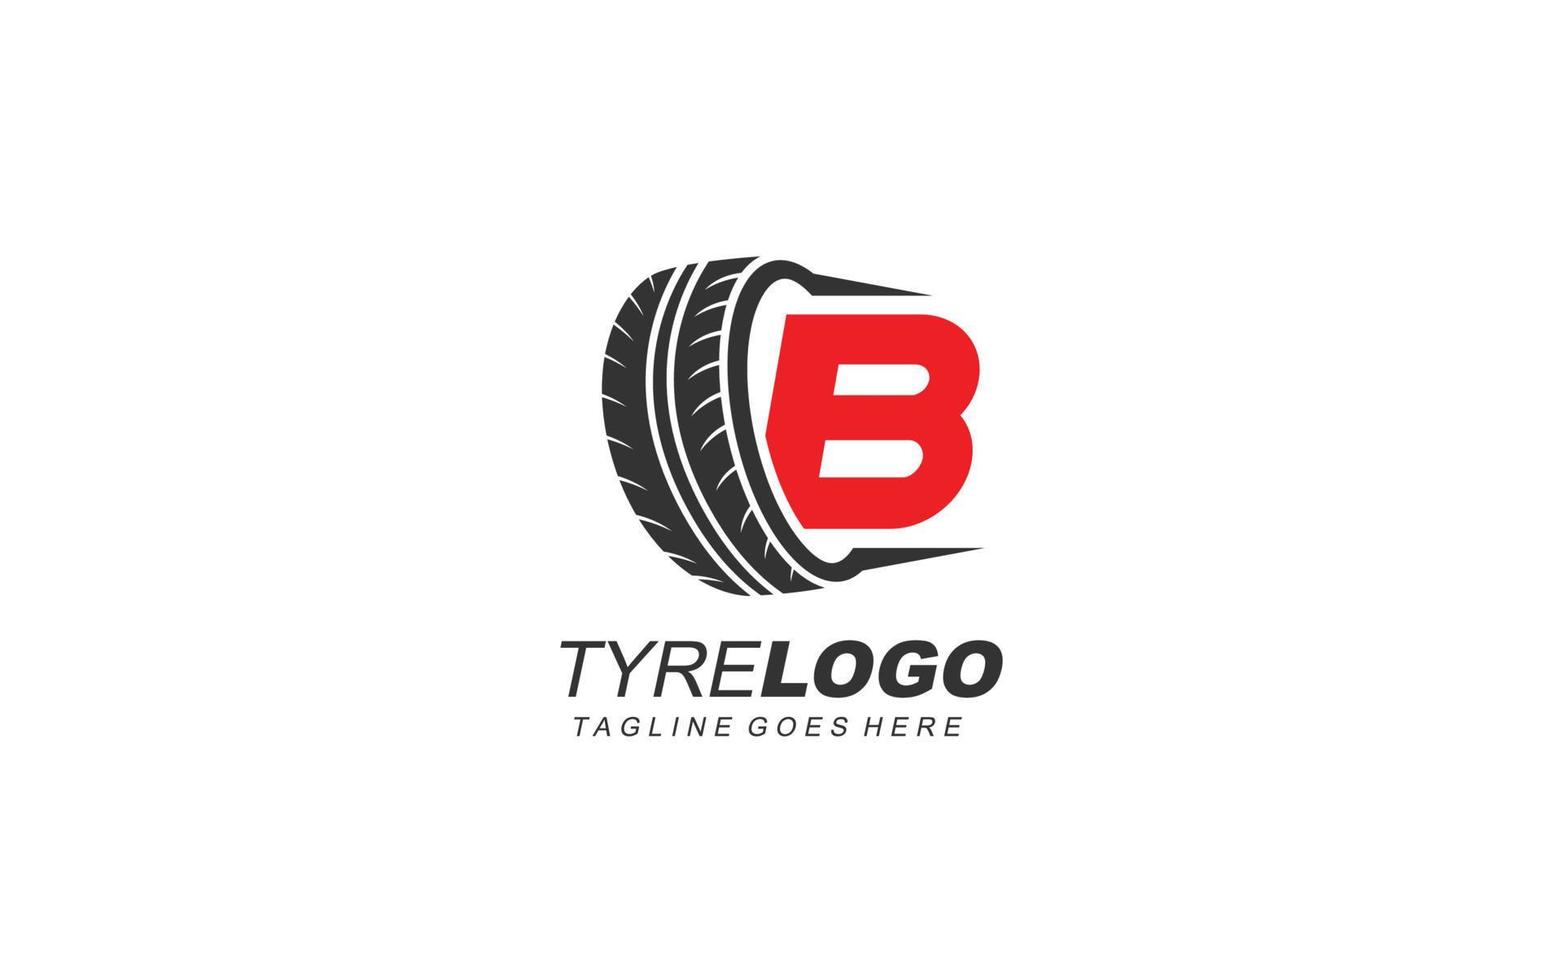 B logo tyre for branding company. wheel template vector illustration for your brand.